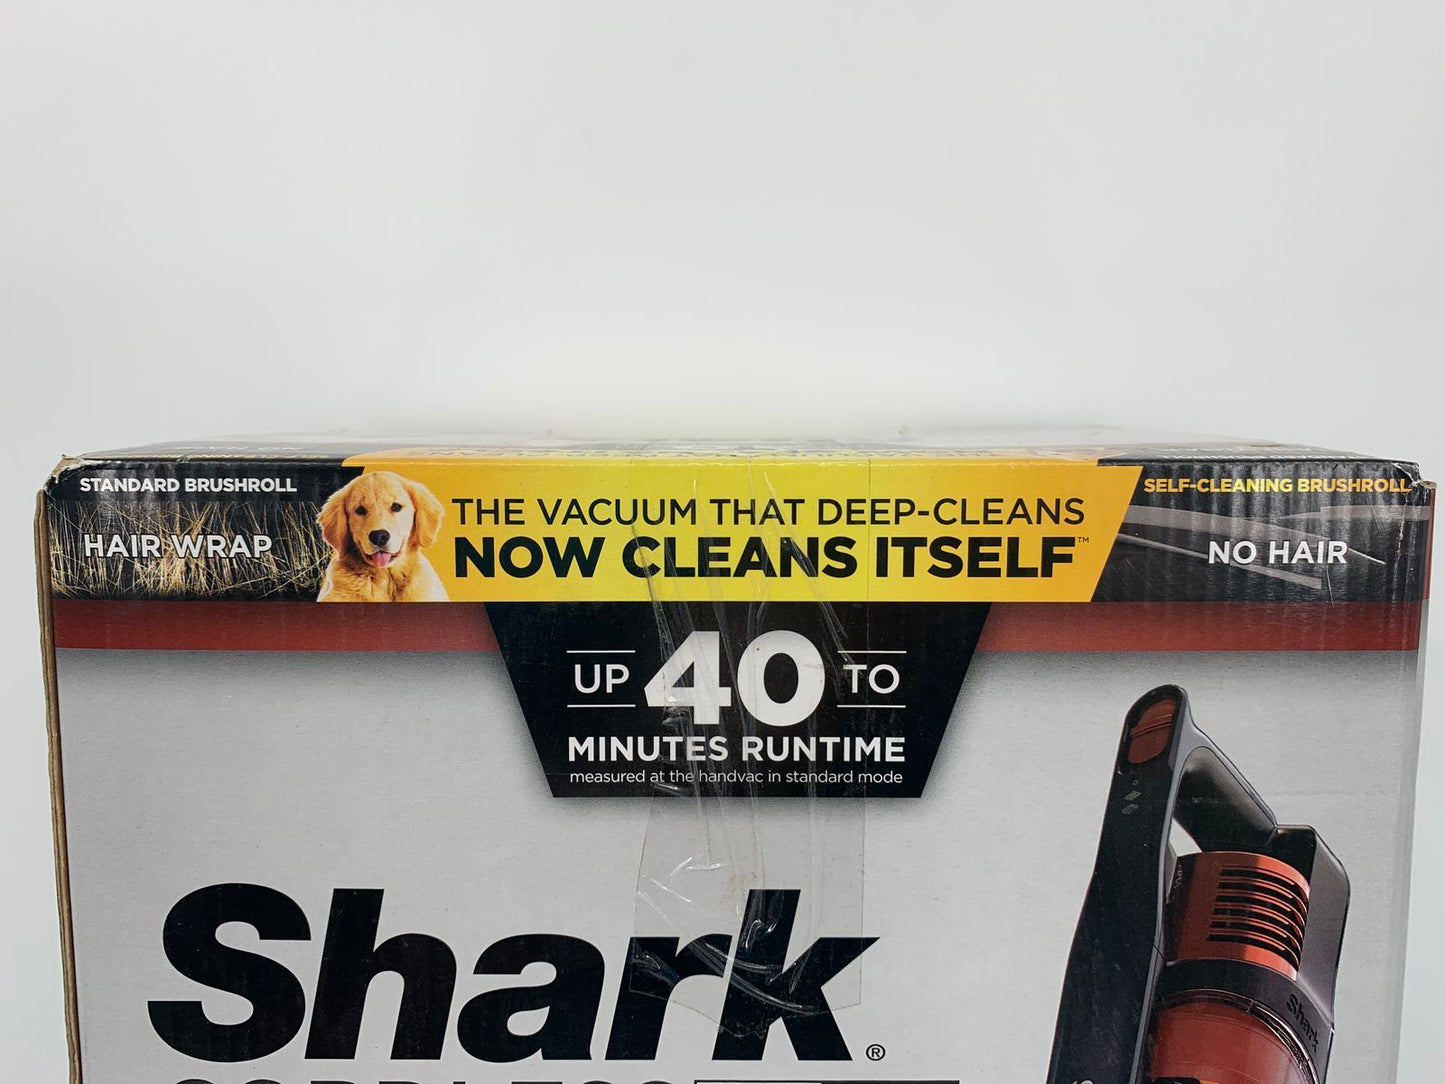 Pet Pro Shark Cordless Terracotta Vacuum Cleaner #Iz142 *New*